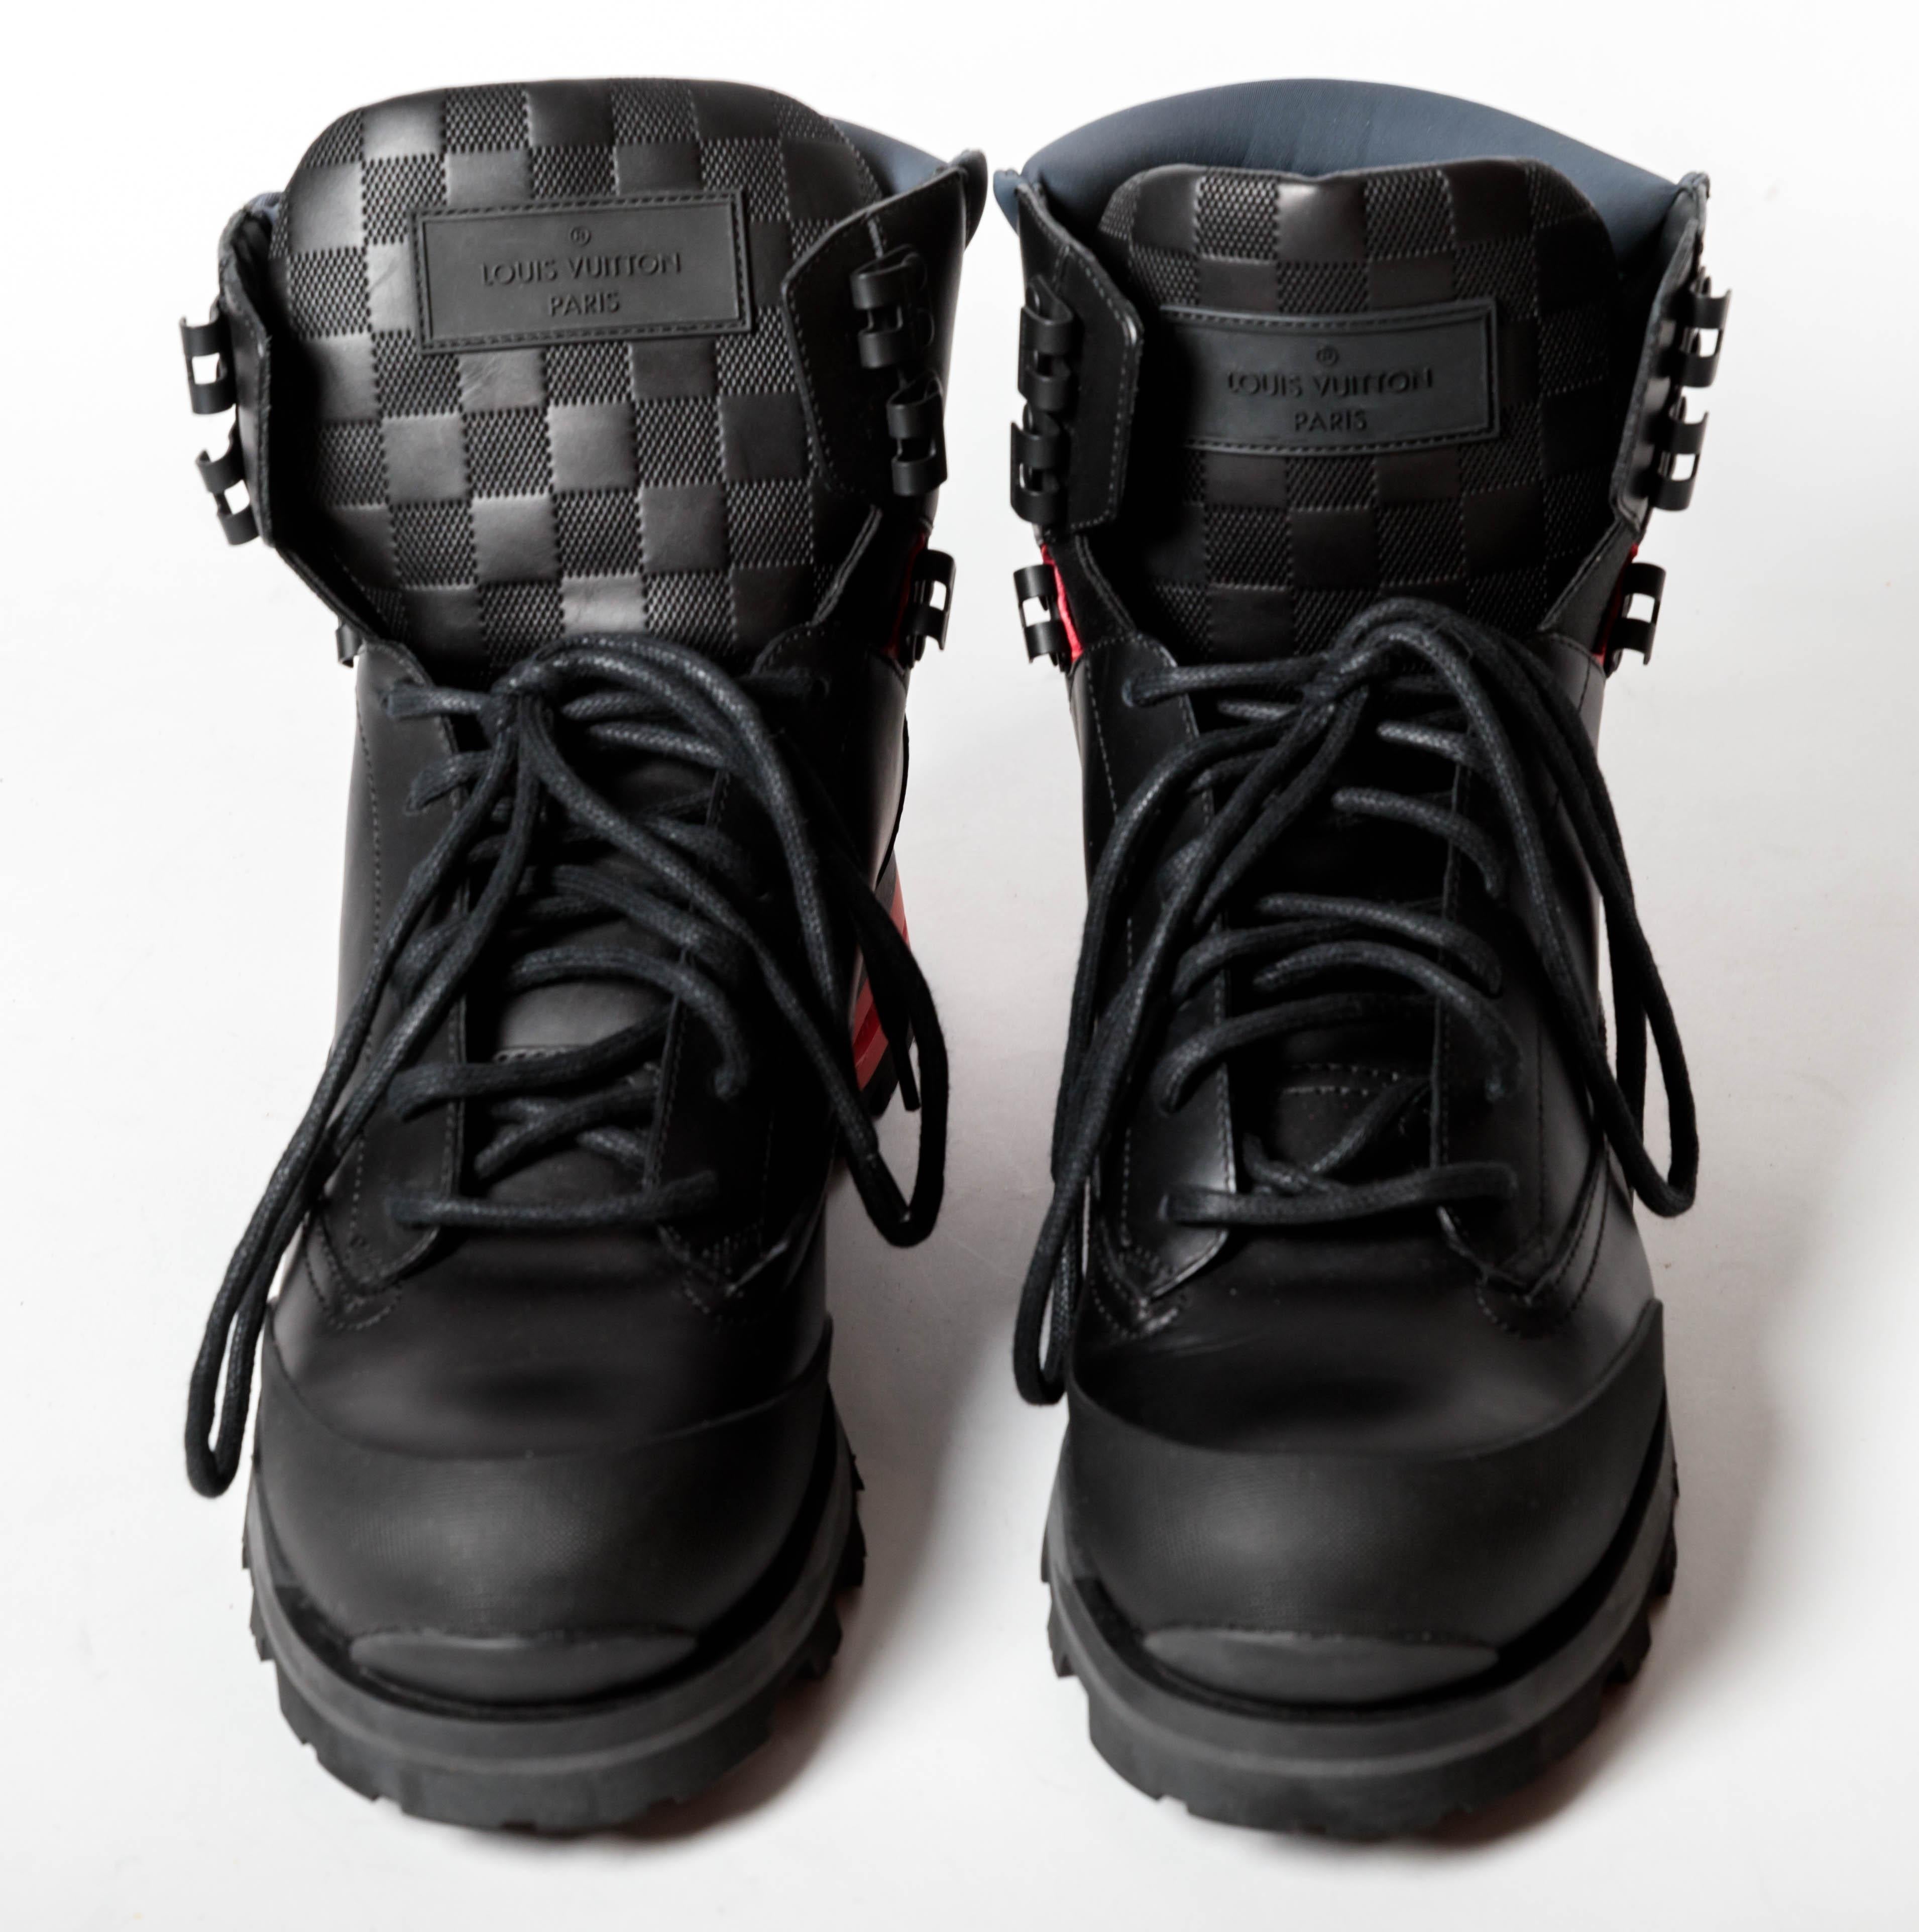 Louis Vuitton Mens Calfskin Damier Blizzard Ankle Boots in Black - Size 8.5 3